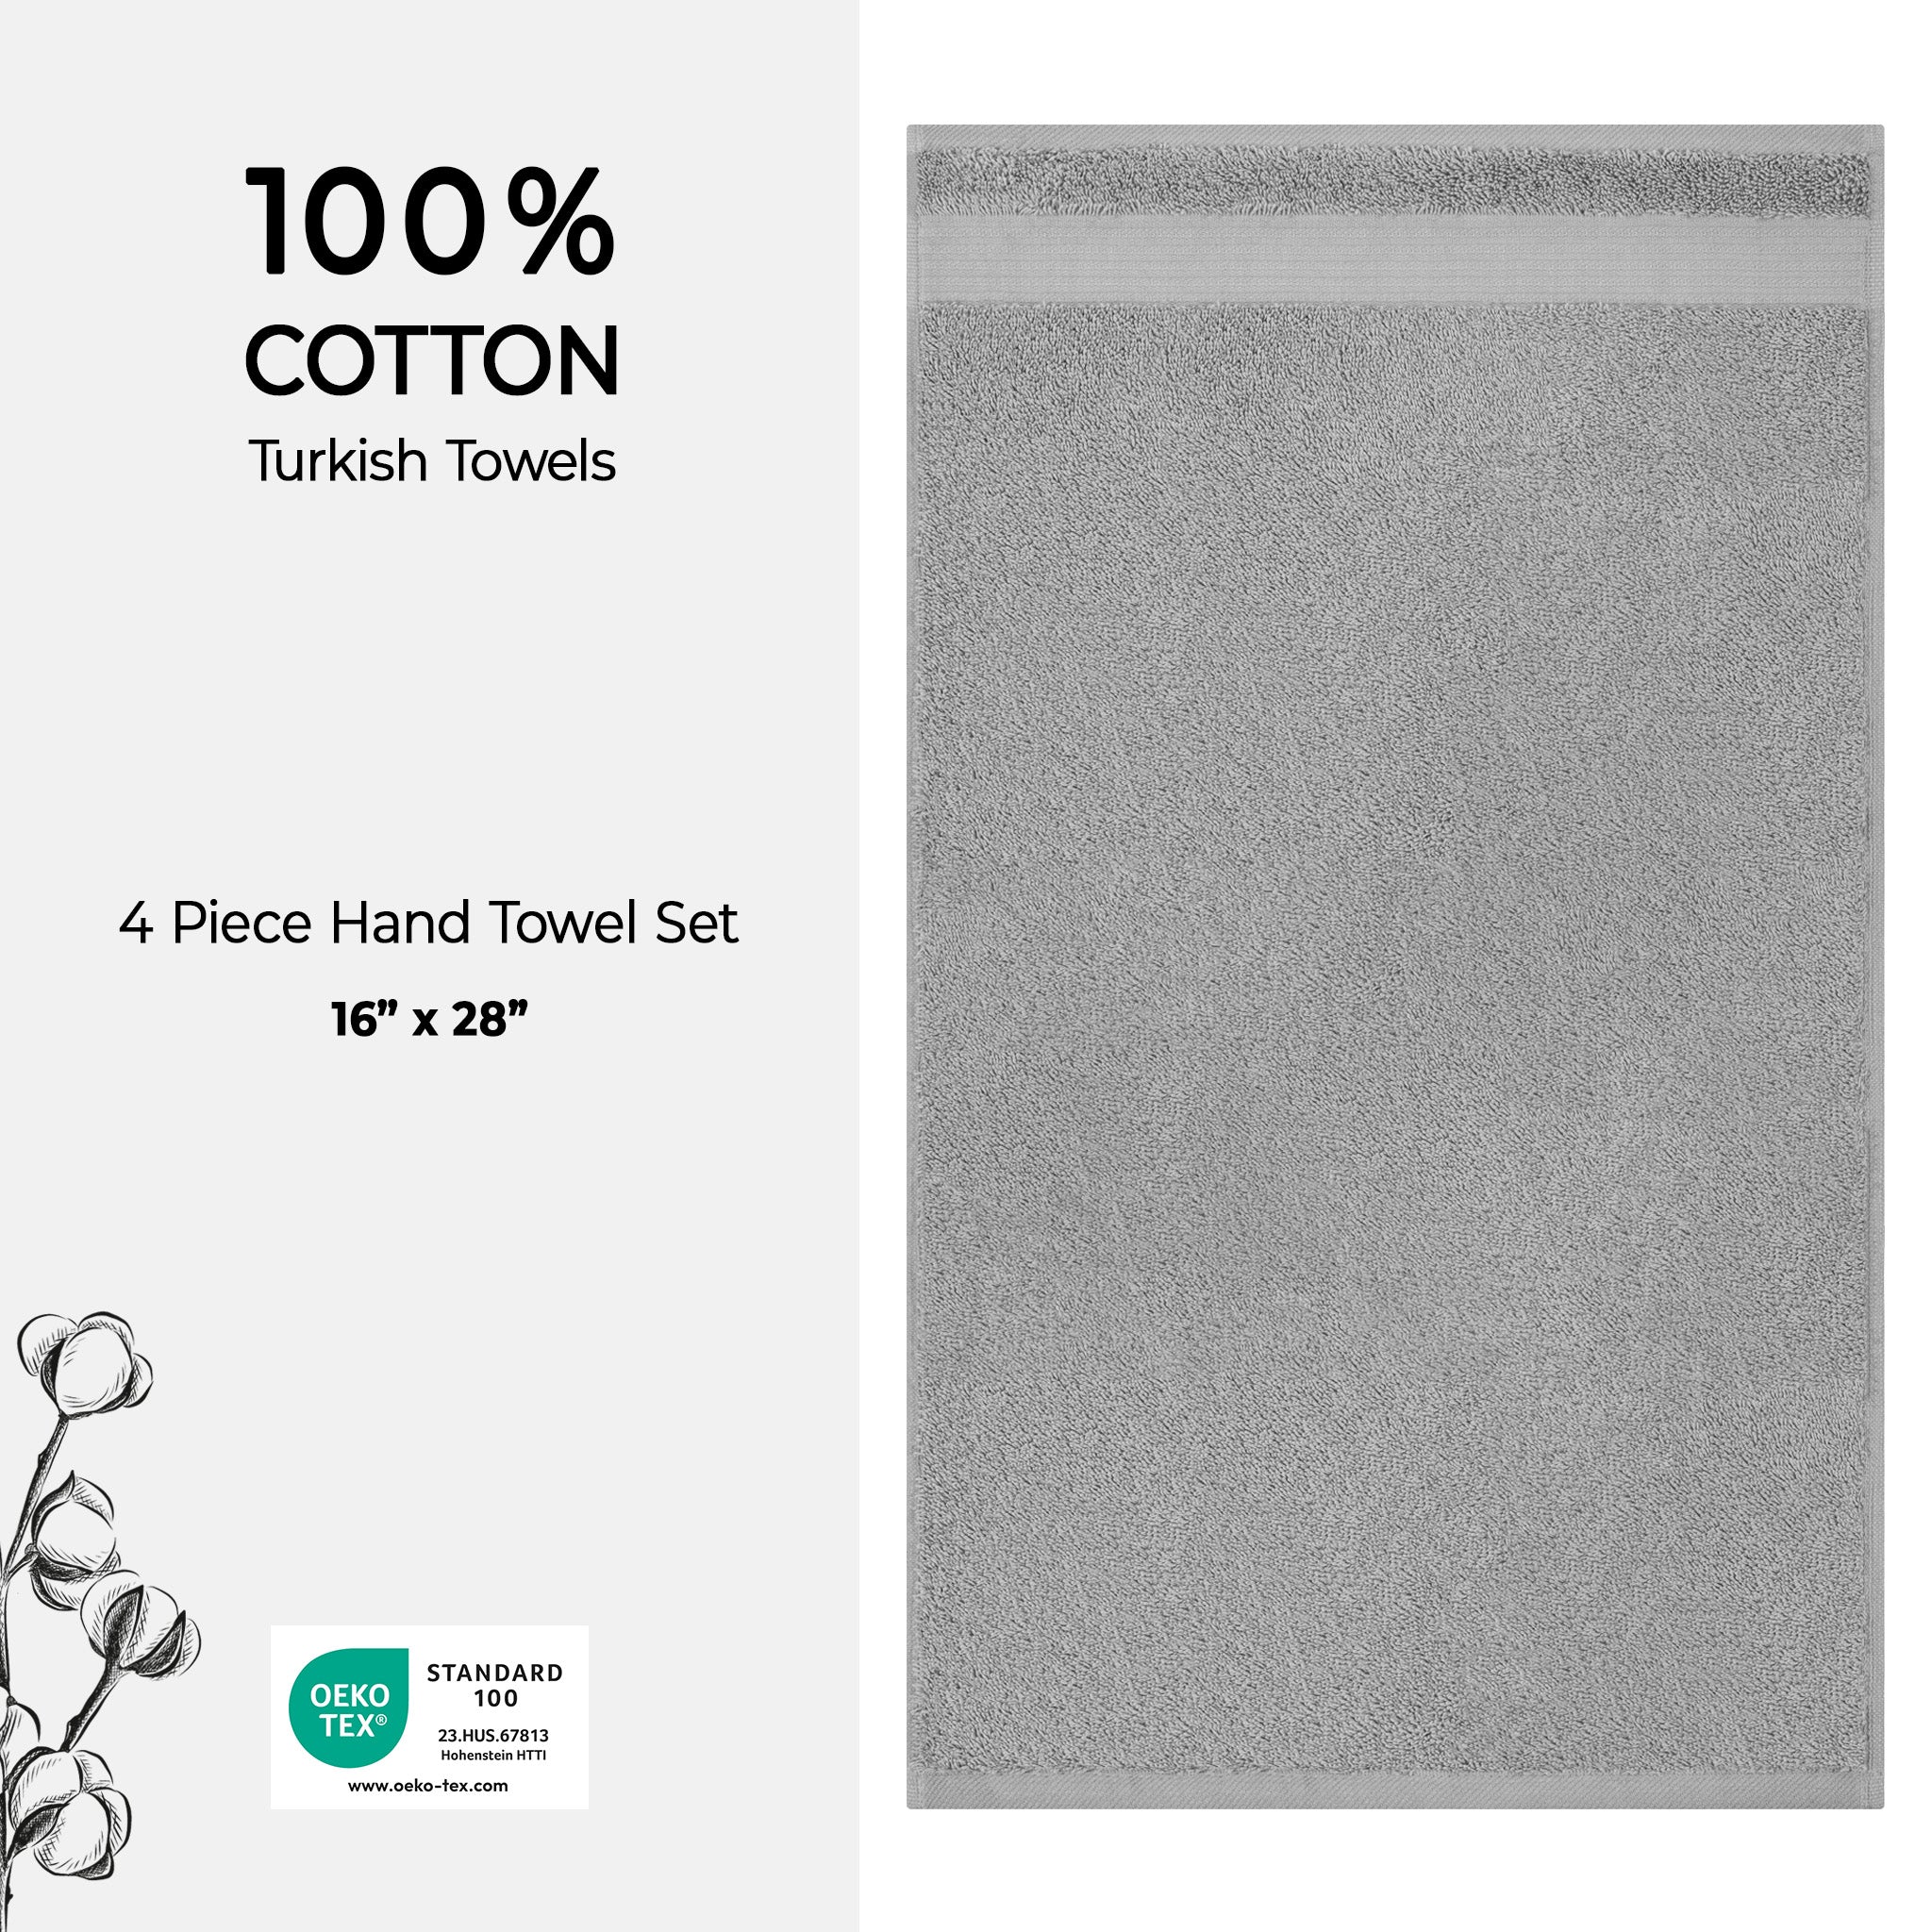 American Soft Linen Bekos 100% Cotton Turkish Towels, 4 Piece Hand Towel Set -rockridge-gray-04